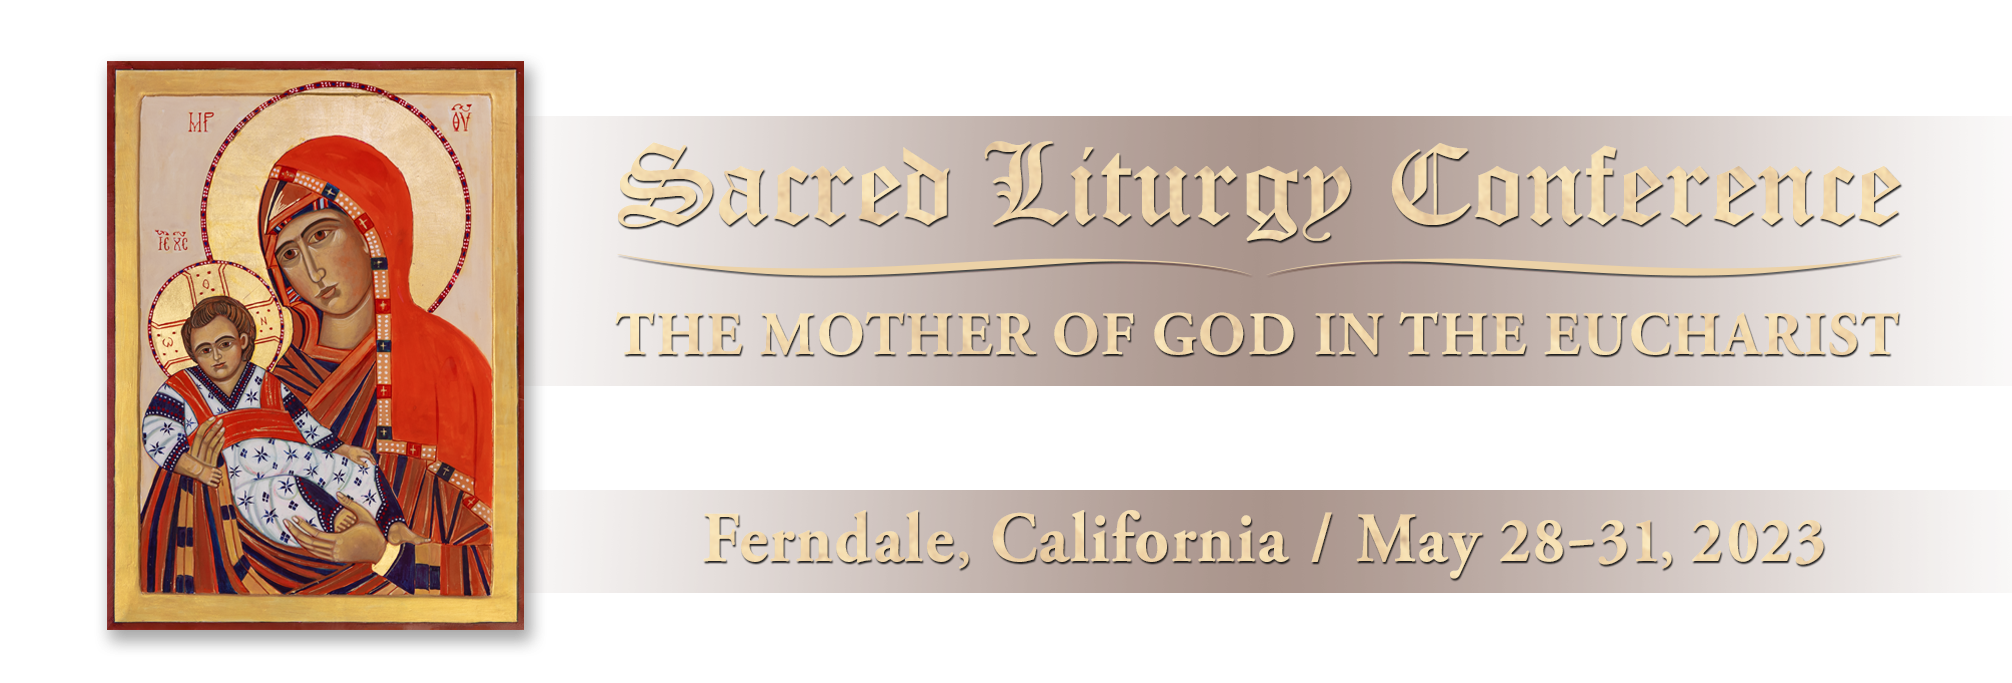 Sacred Liturgy Conference